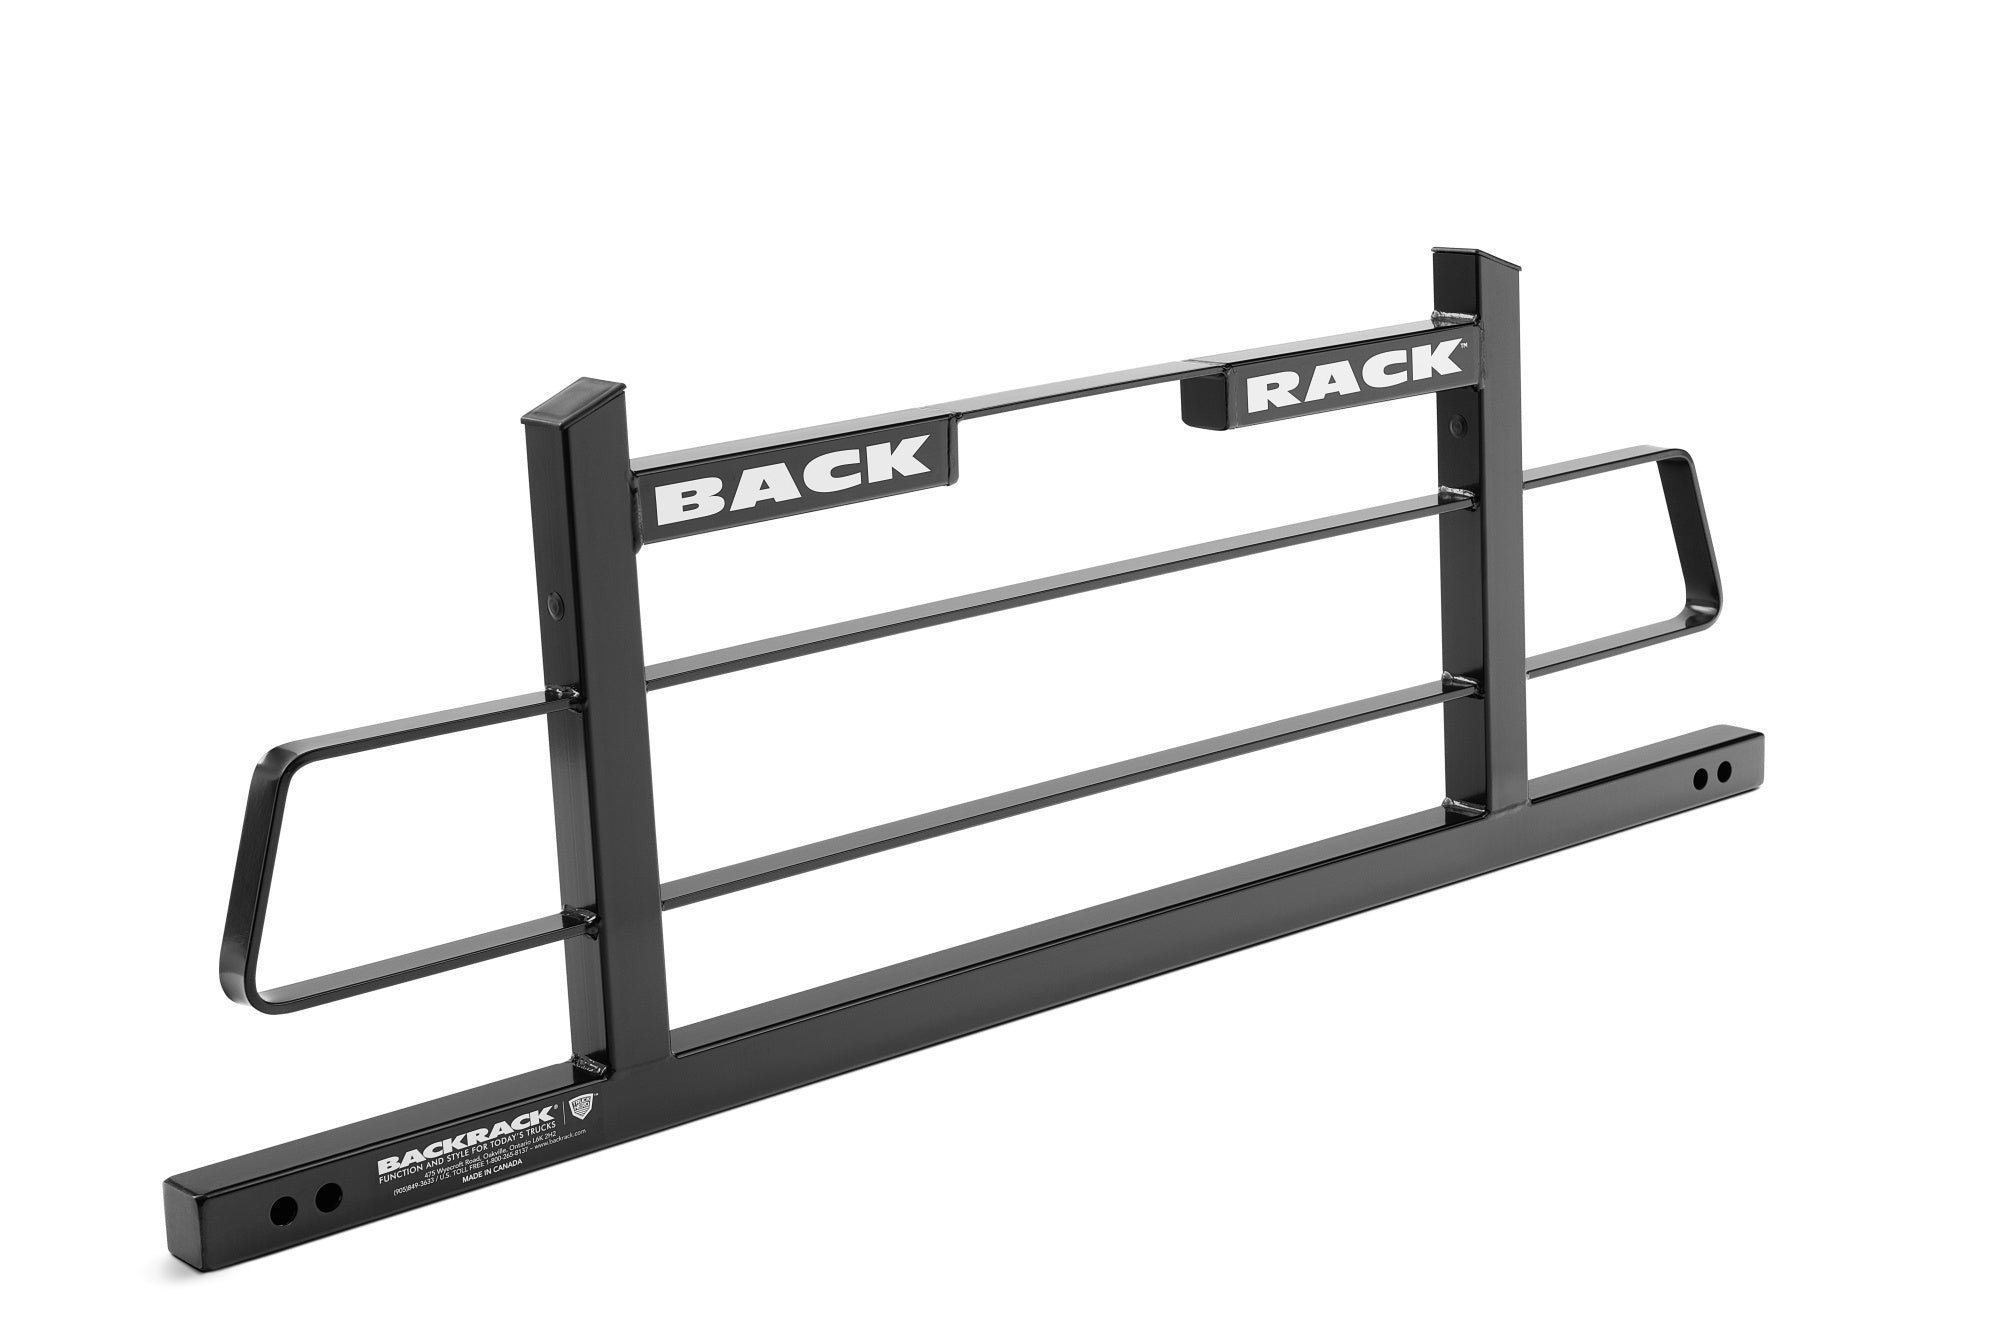 BACKRACK Original Rack Frame fits Chevy/GMC/Ford/Nissan/Ram/Toyota trucks